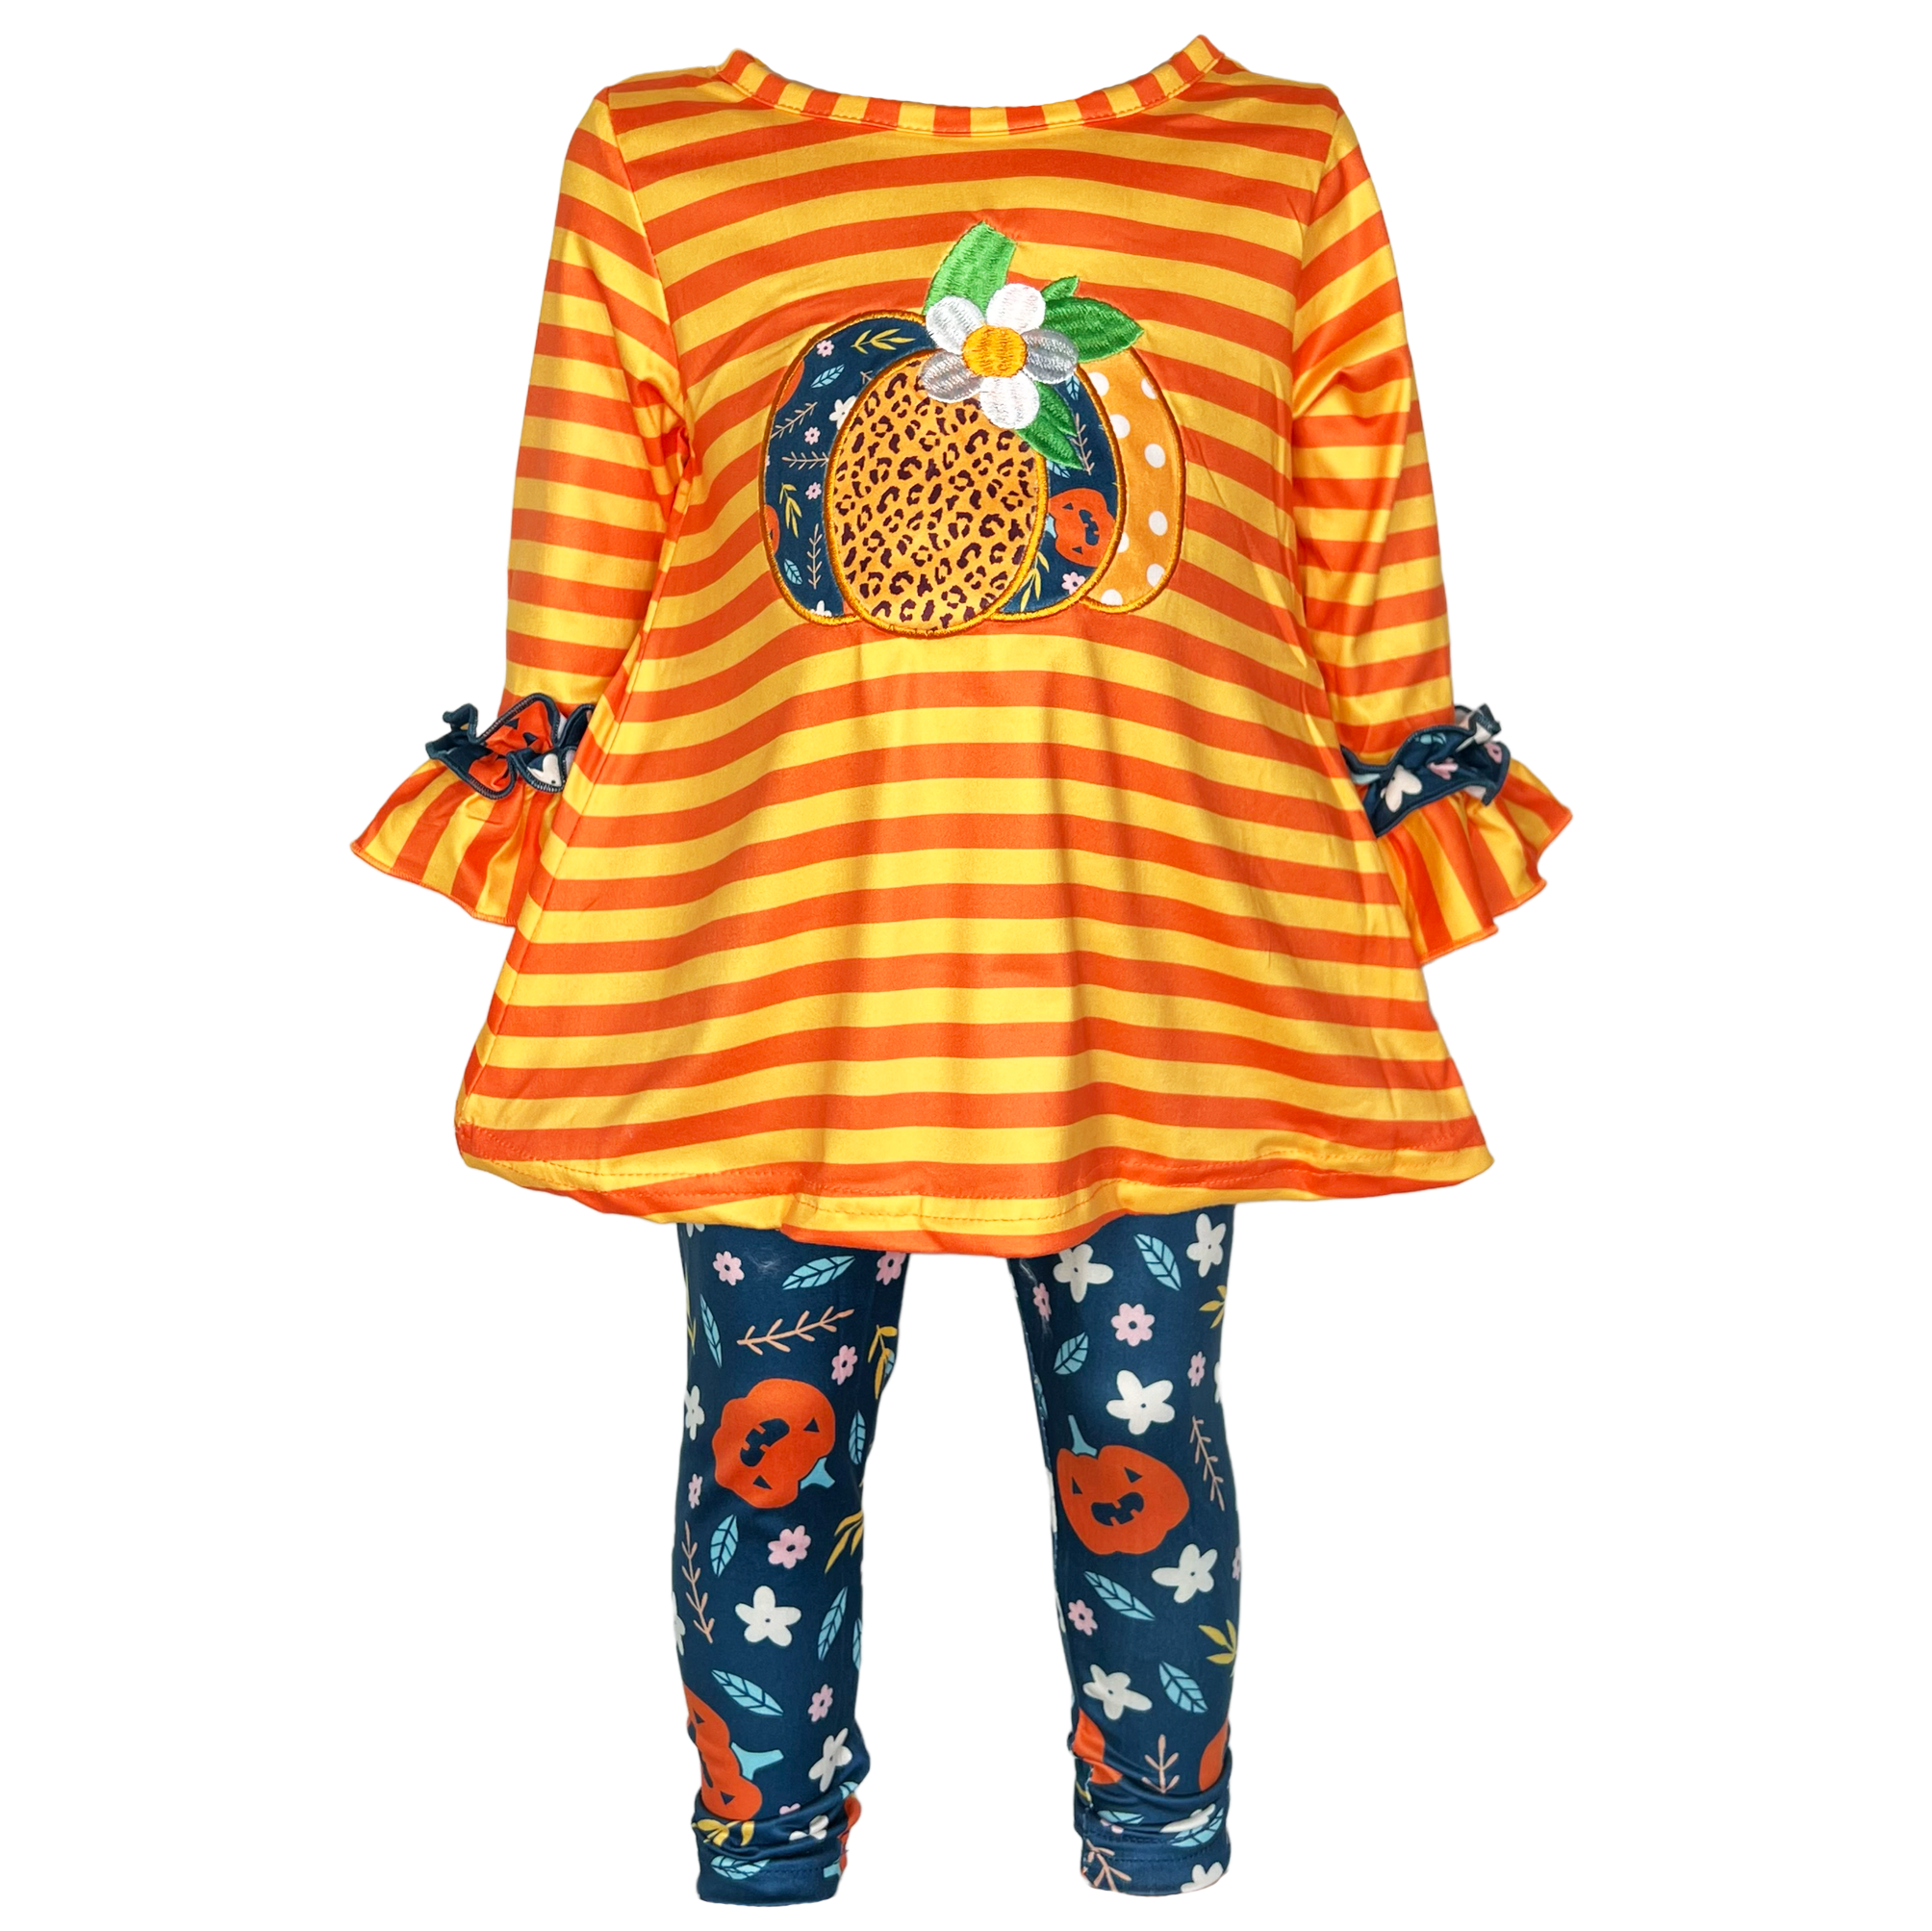 Girls Orange & Blue Fall Harvest Pumpkin Tunic and Leggings-4